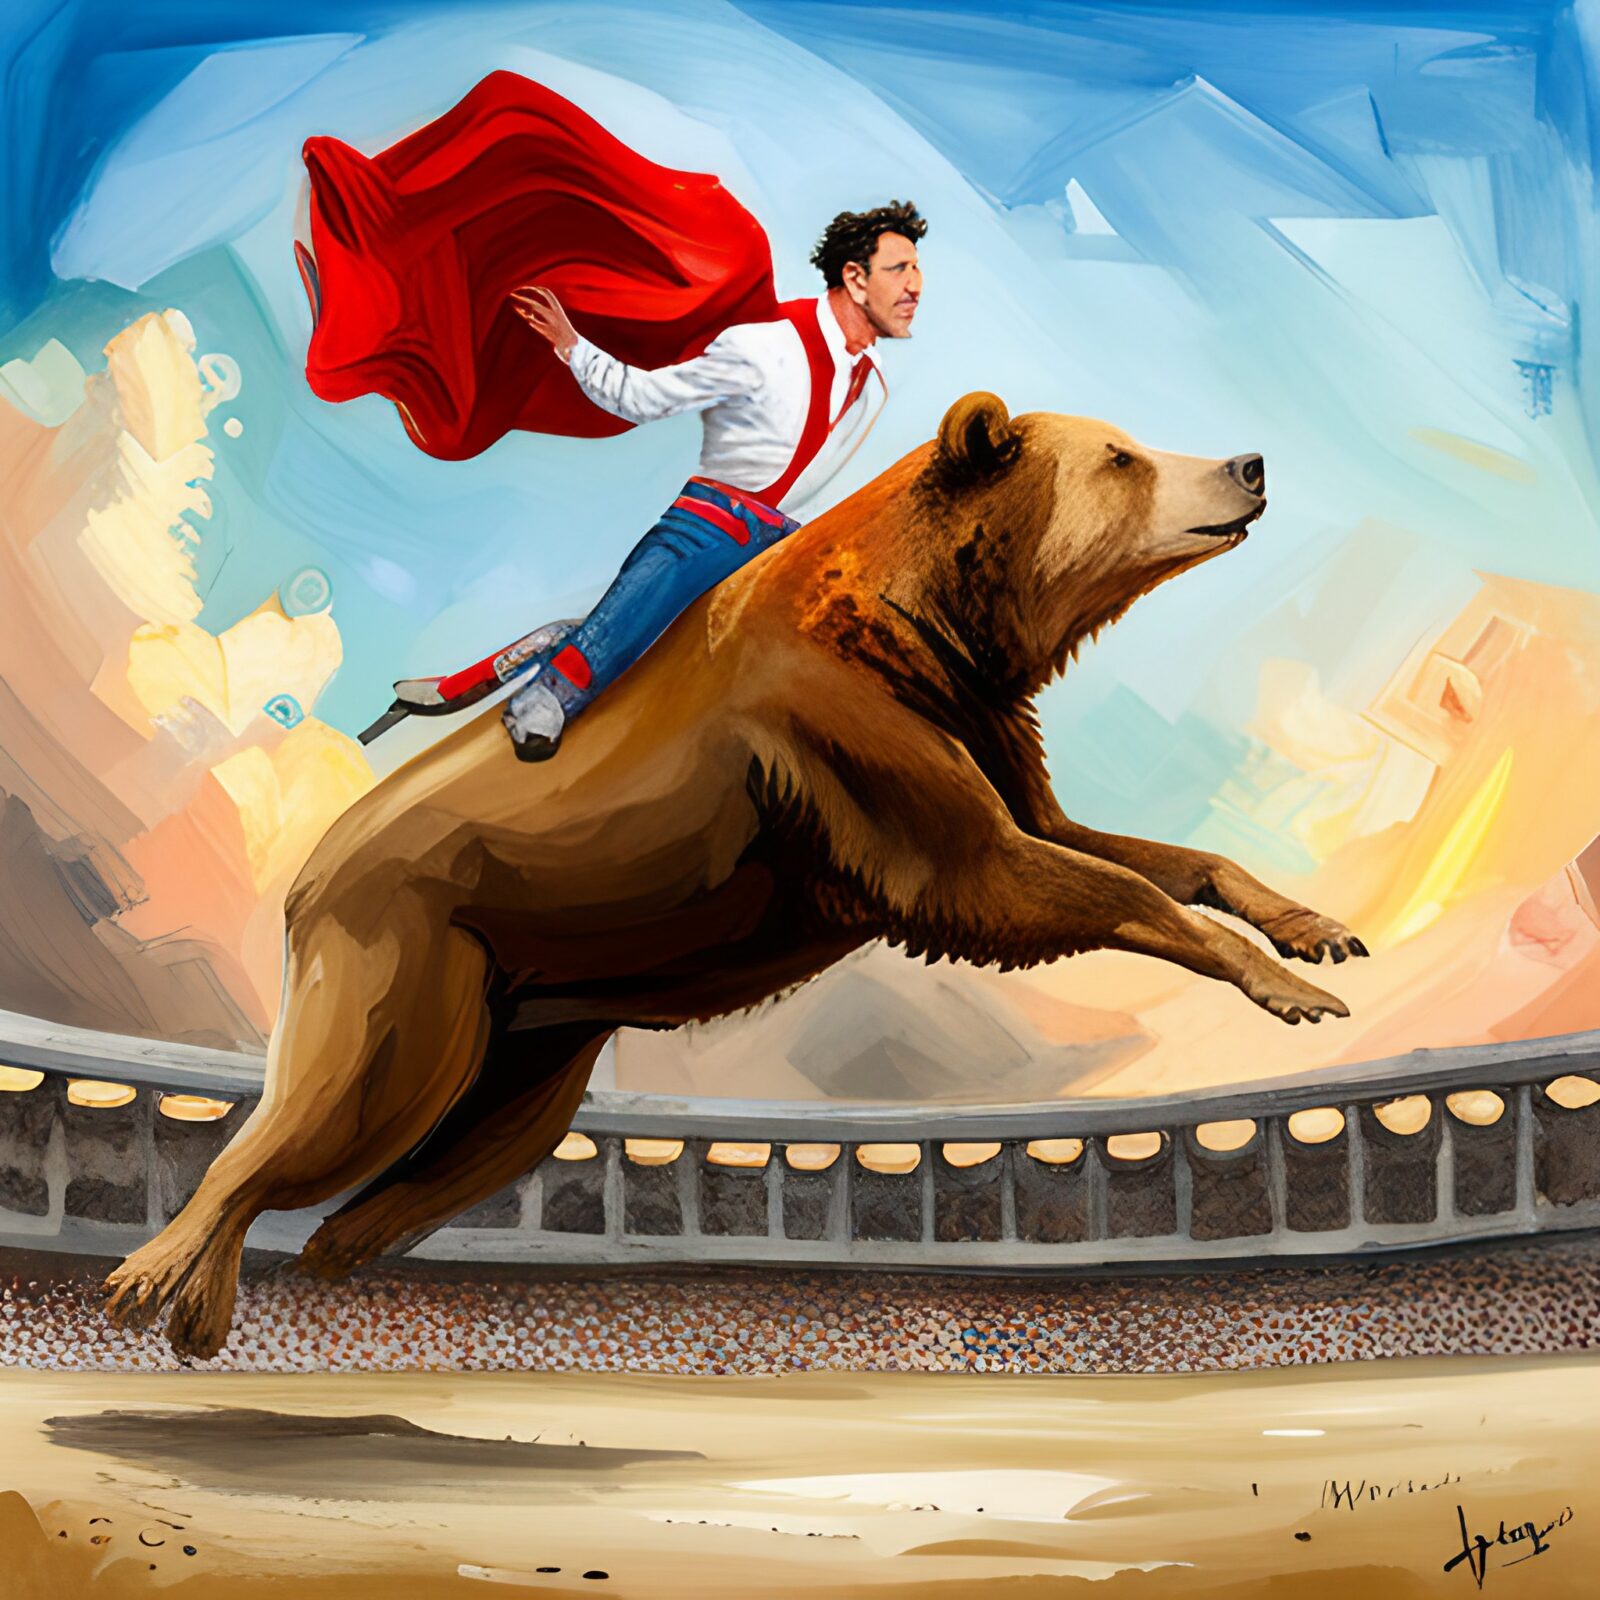 Bullfighter riding a bear